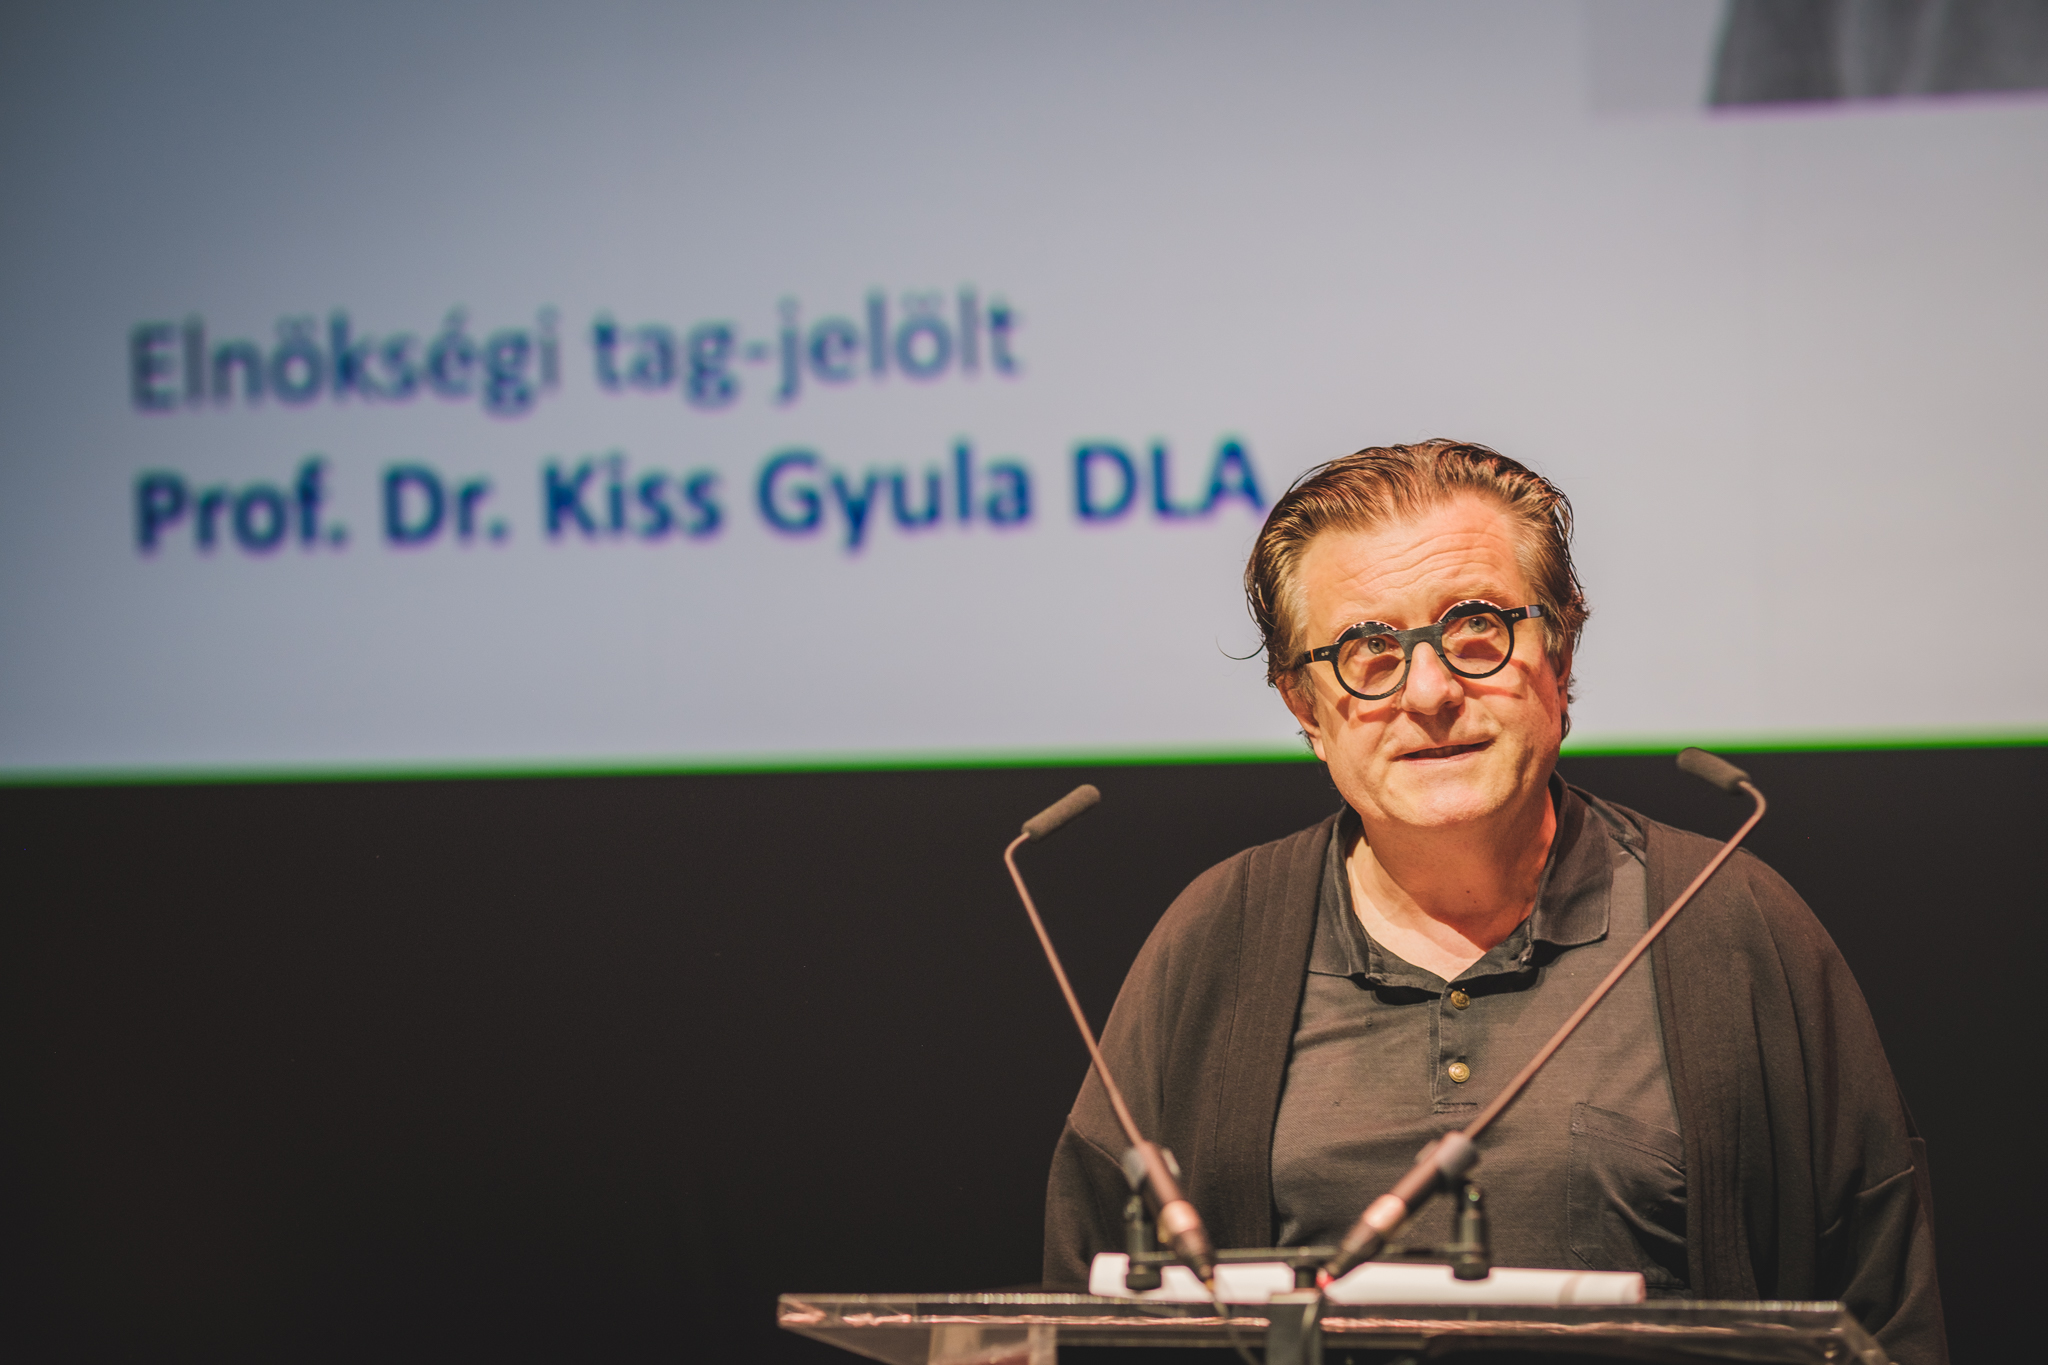 Prof. Gyula Kiss